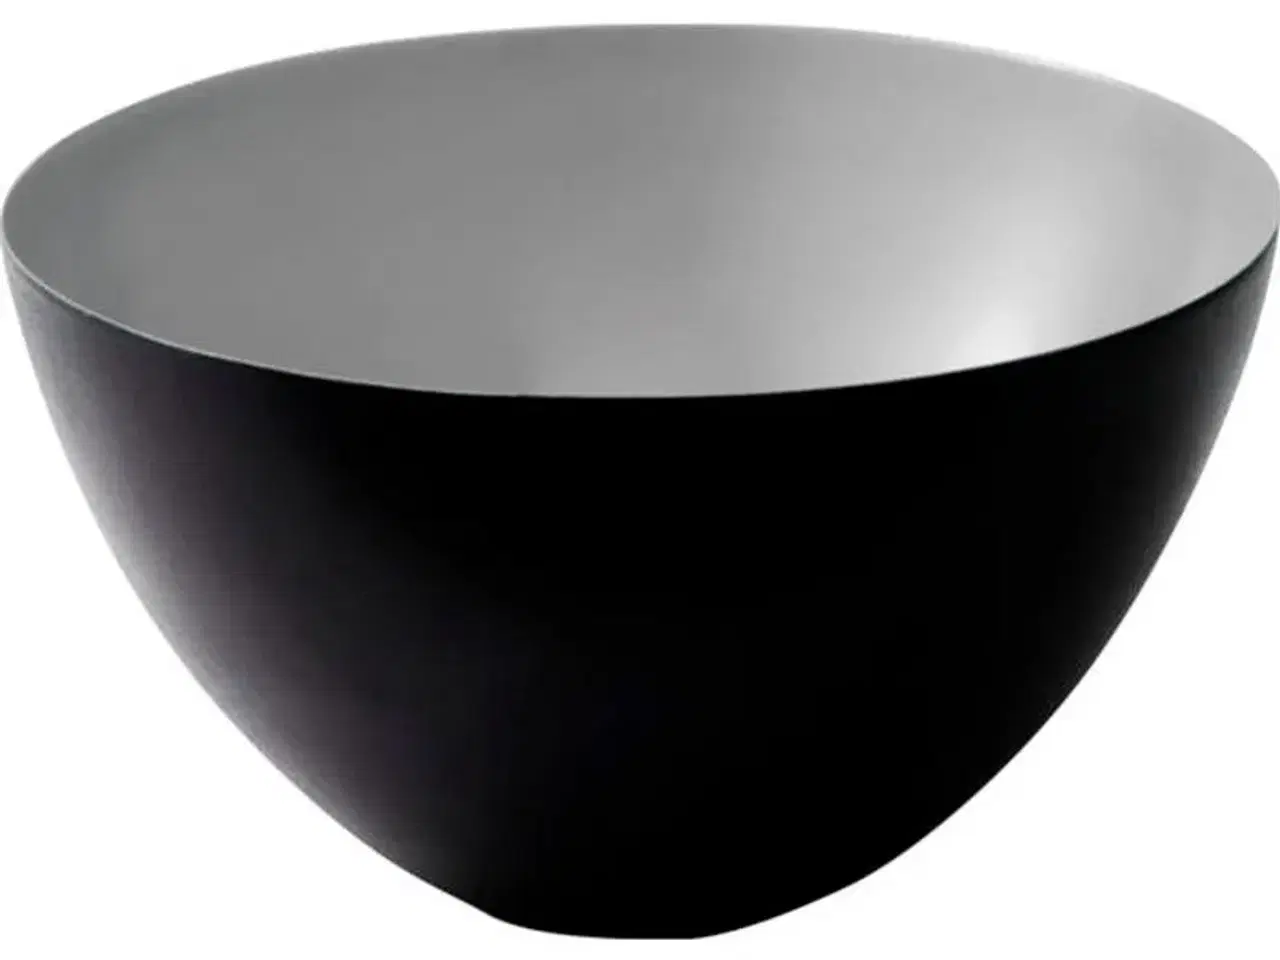 Billede 1 - Norman Copenhagen skål, 25 cm i diameter